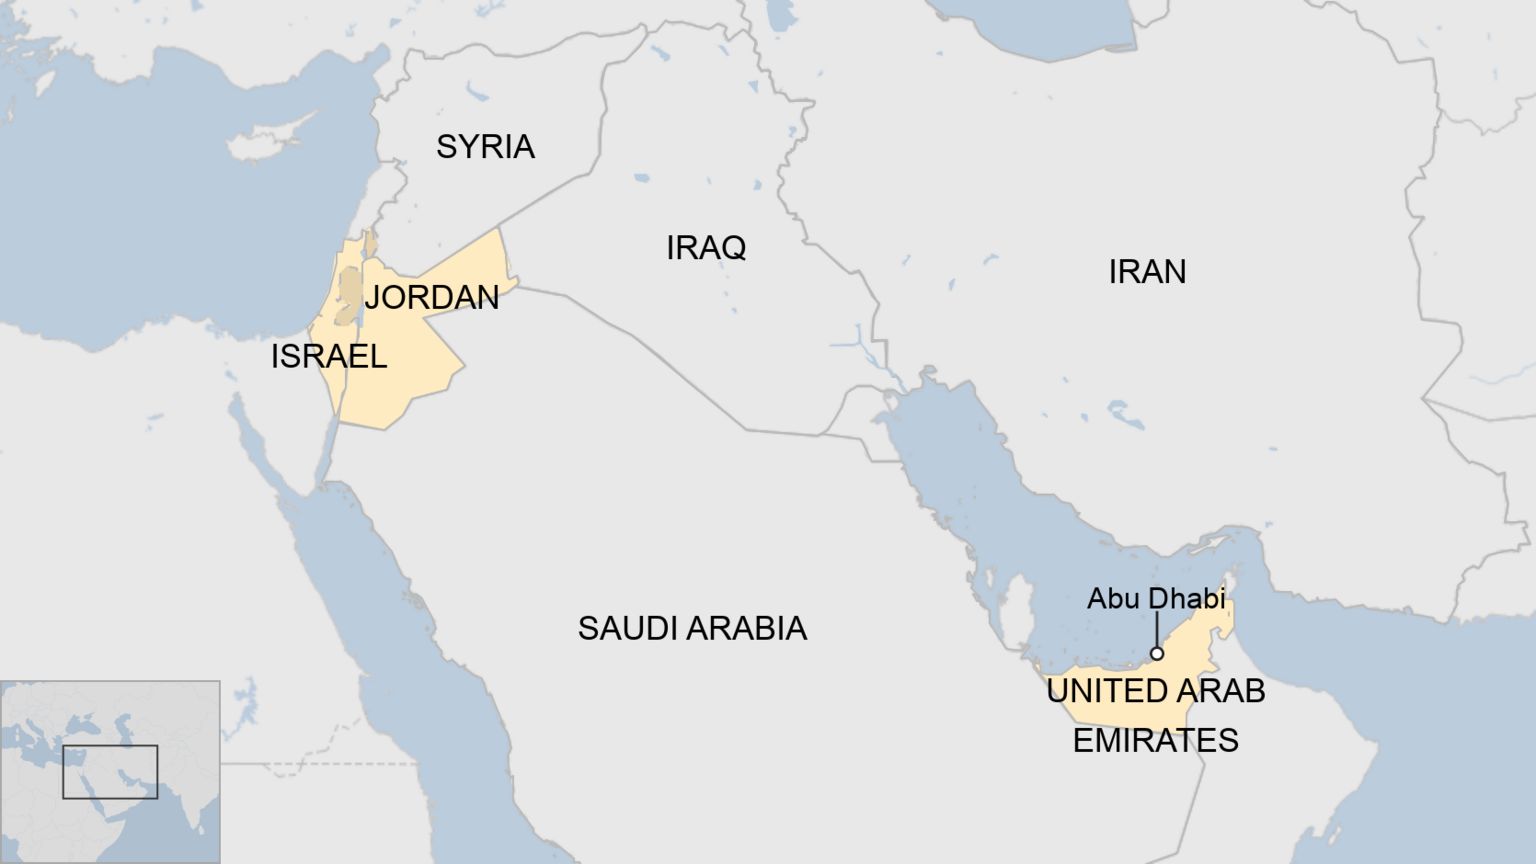 møde pause besked Israel PM delays UAE visit after Jordan overflight 'difficulties' - BBC News